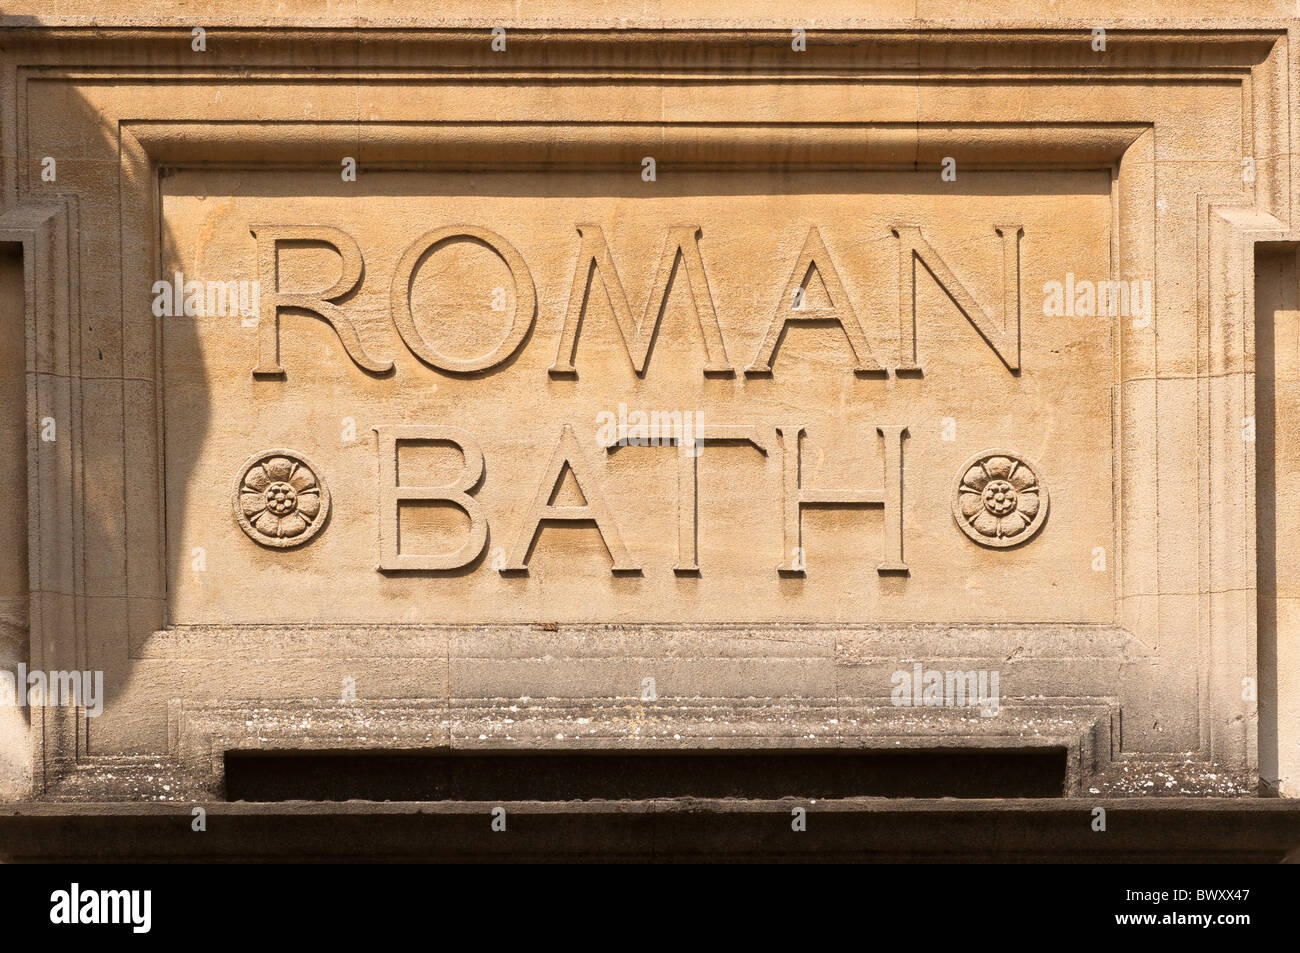 Roman Baths sign, Bath, Somerset, England, United Kingdom. Stock Photo